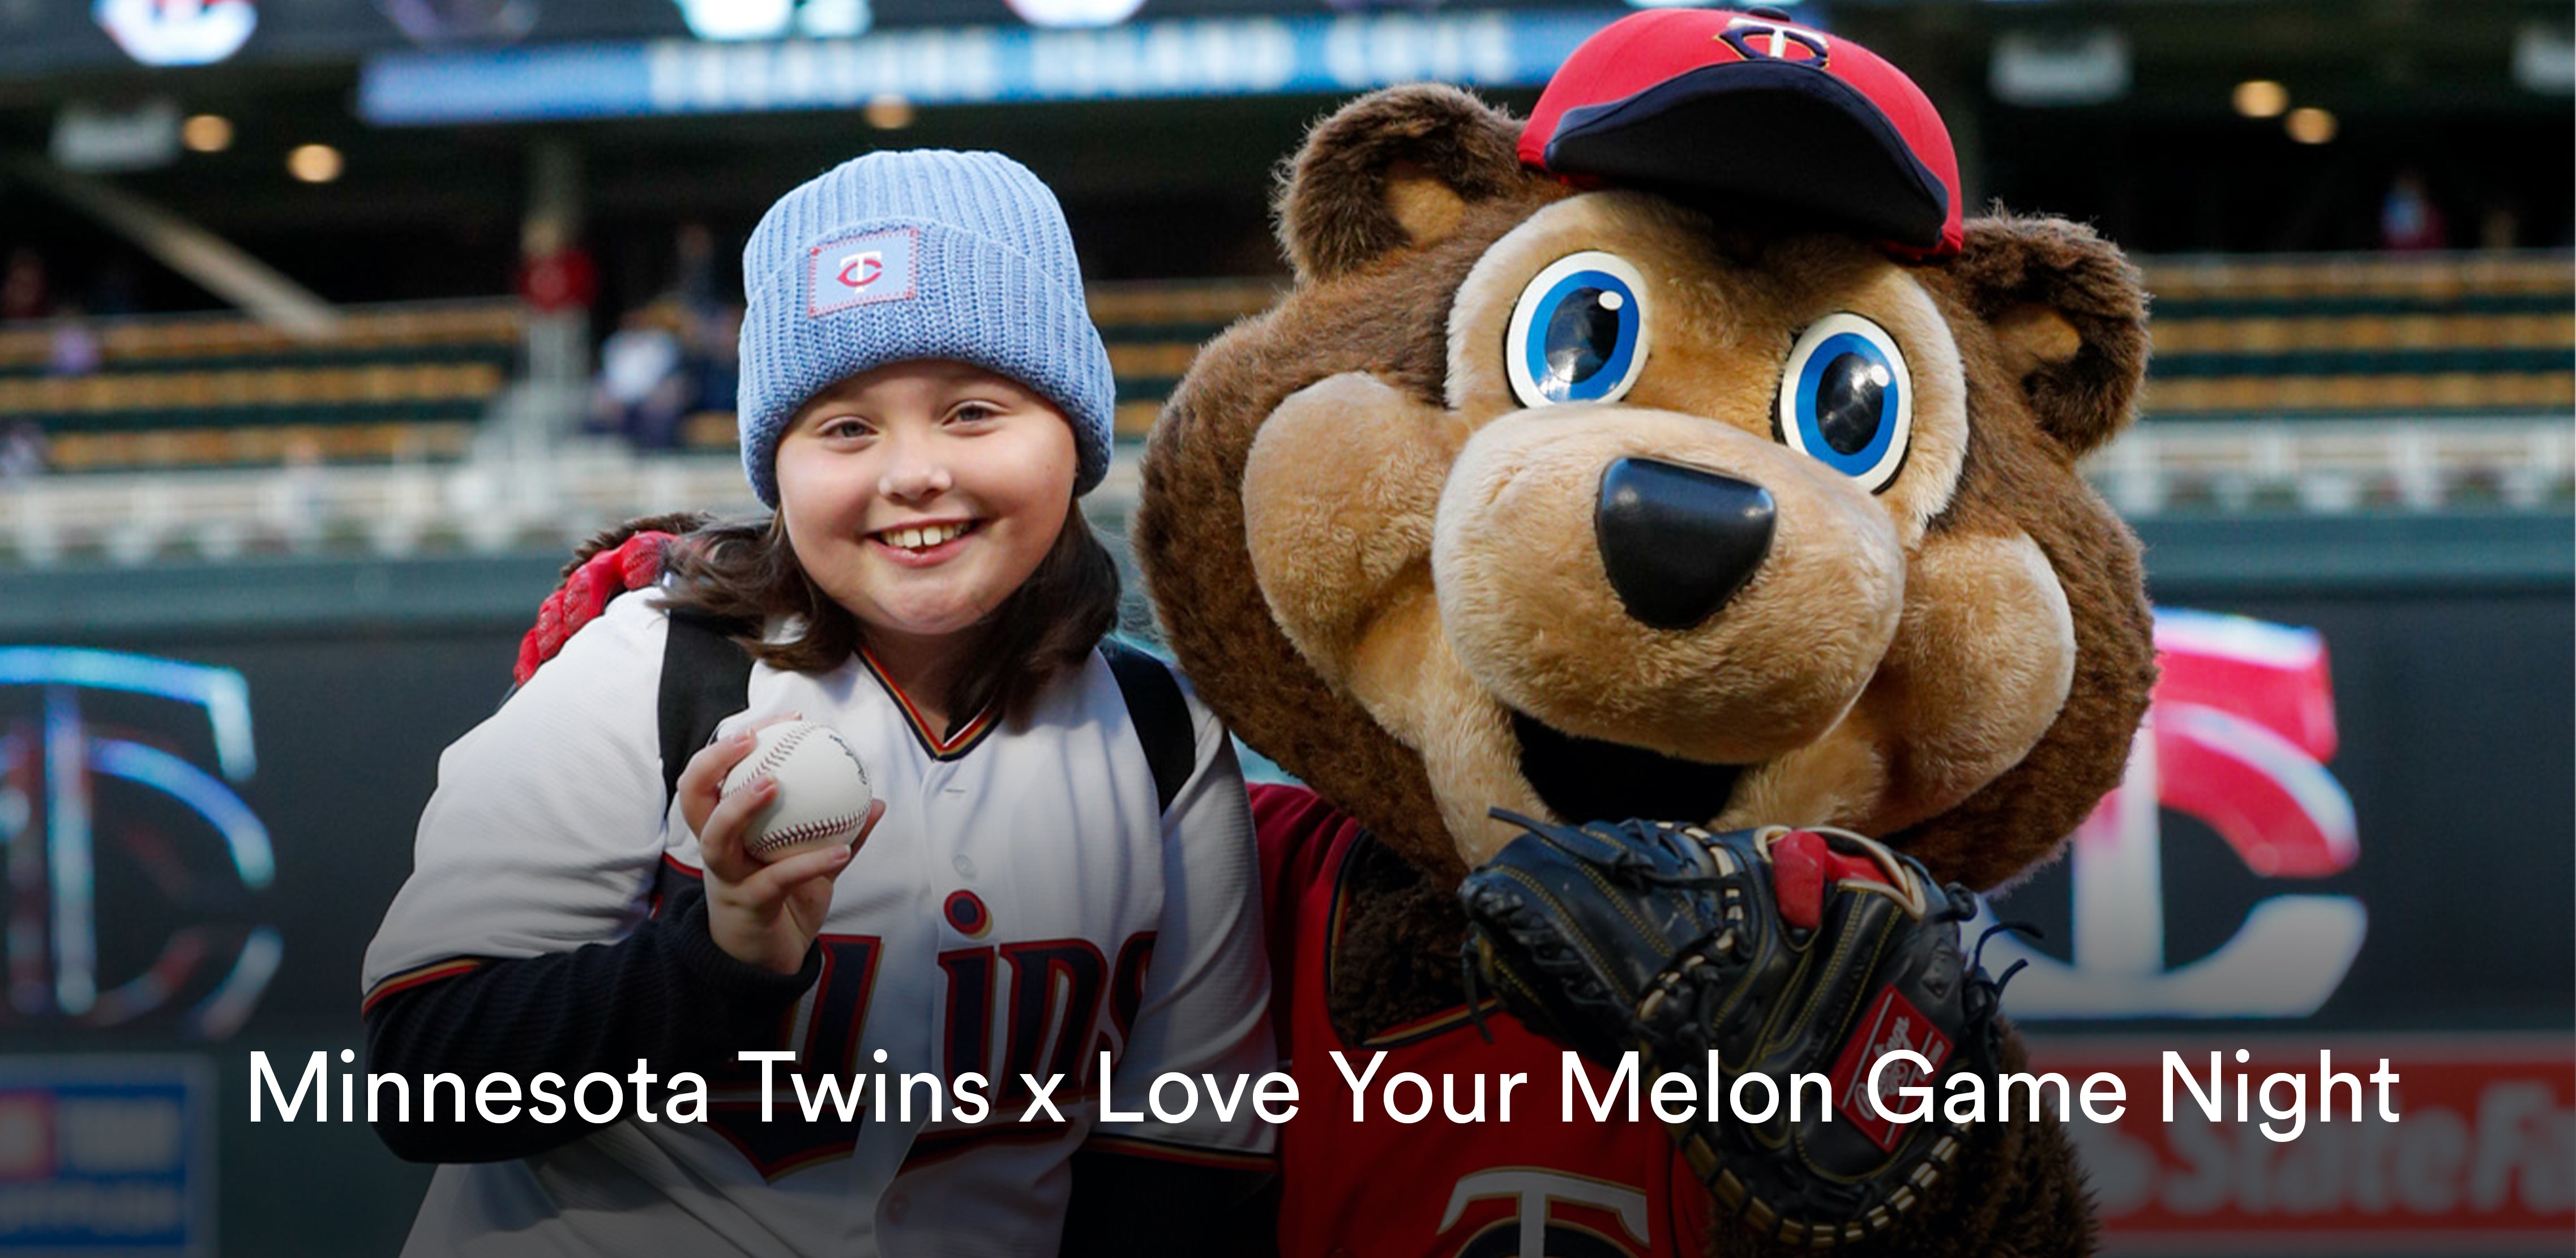 Minnesota Twins x Love Your Melon Game Night